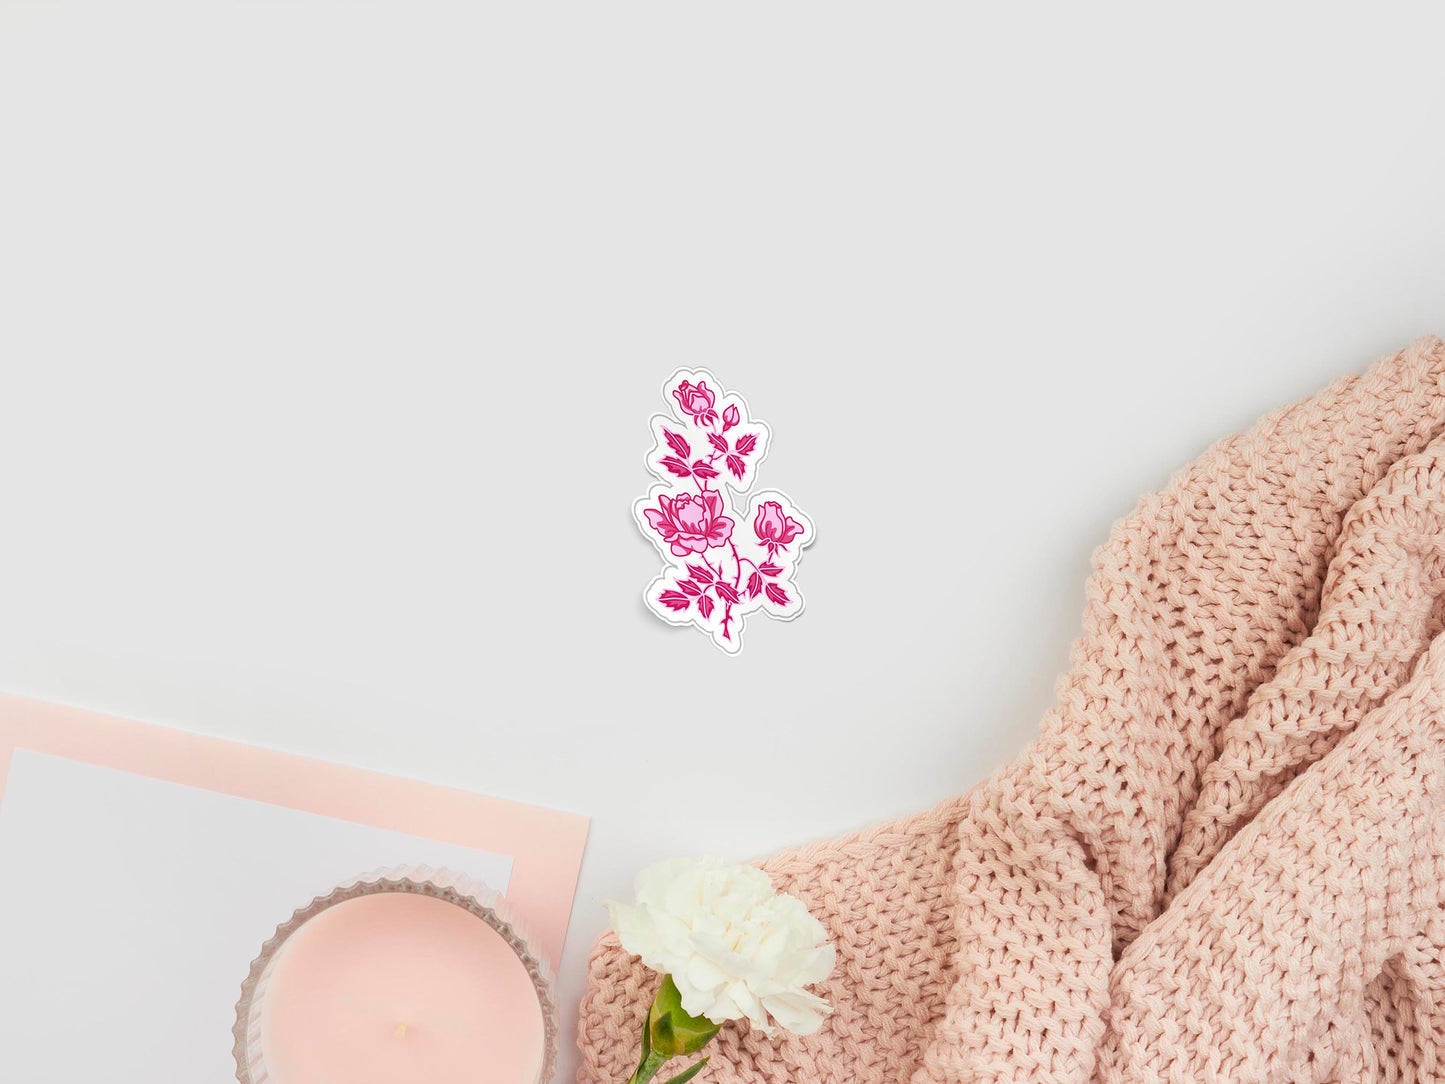 Large sticker of digital illustration cartoon of a pink floral flower pattern